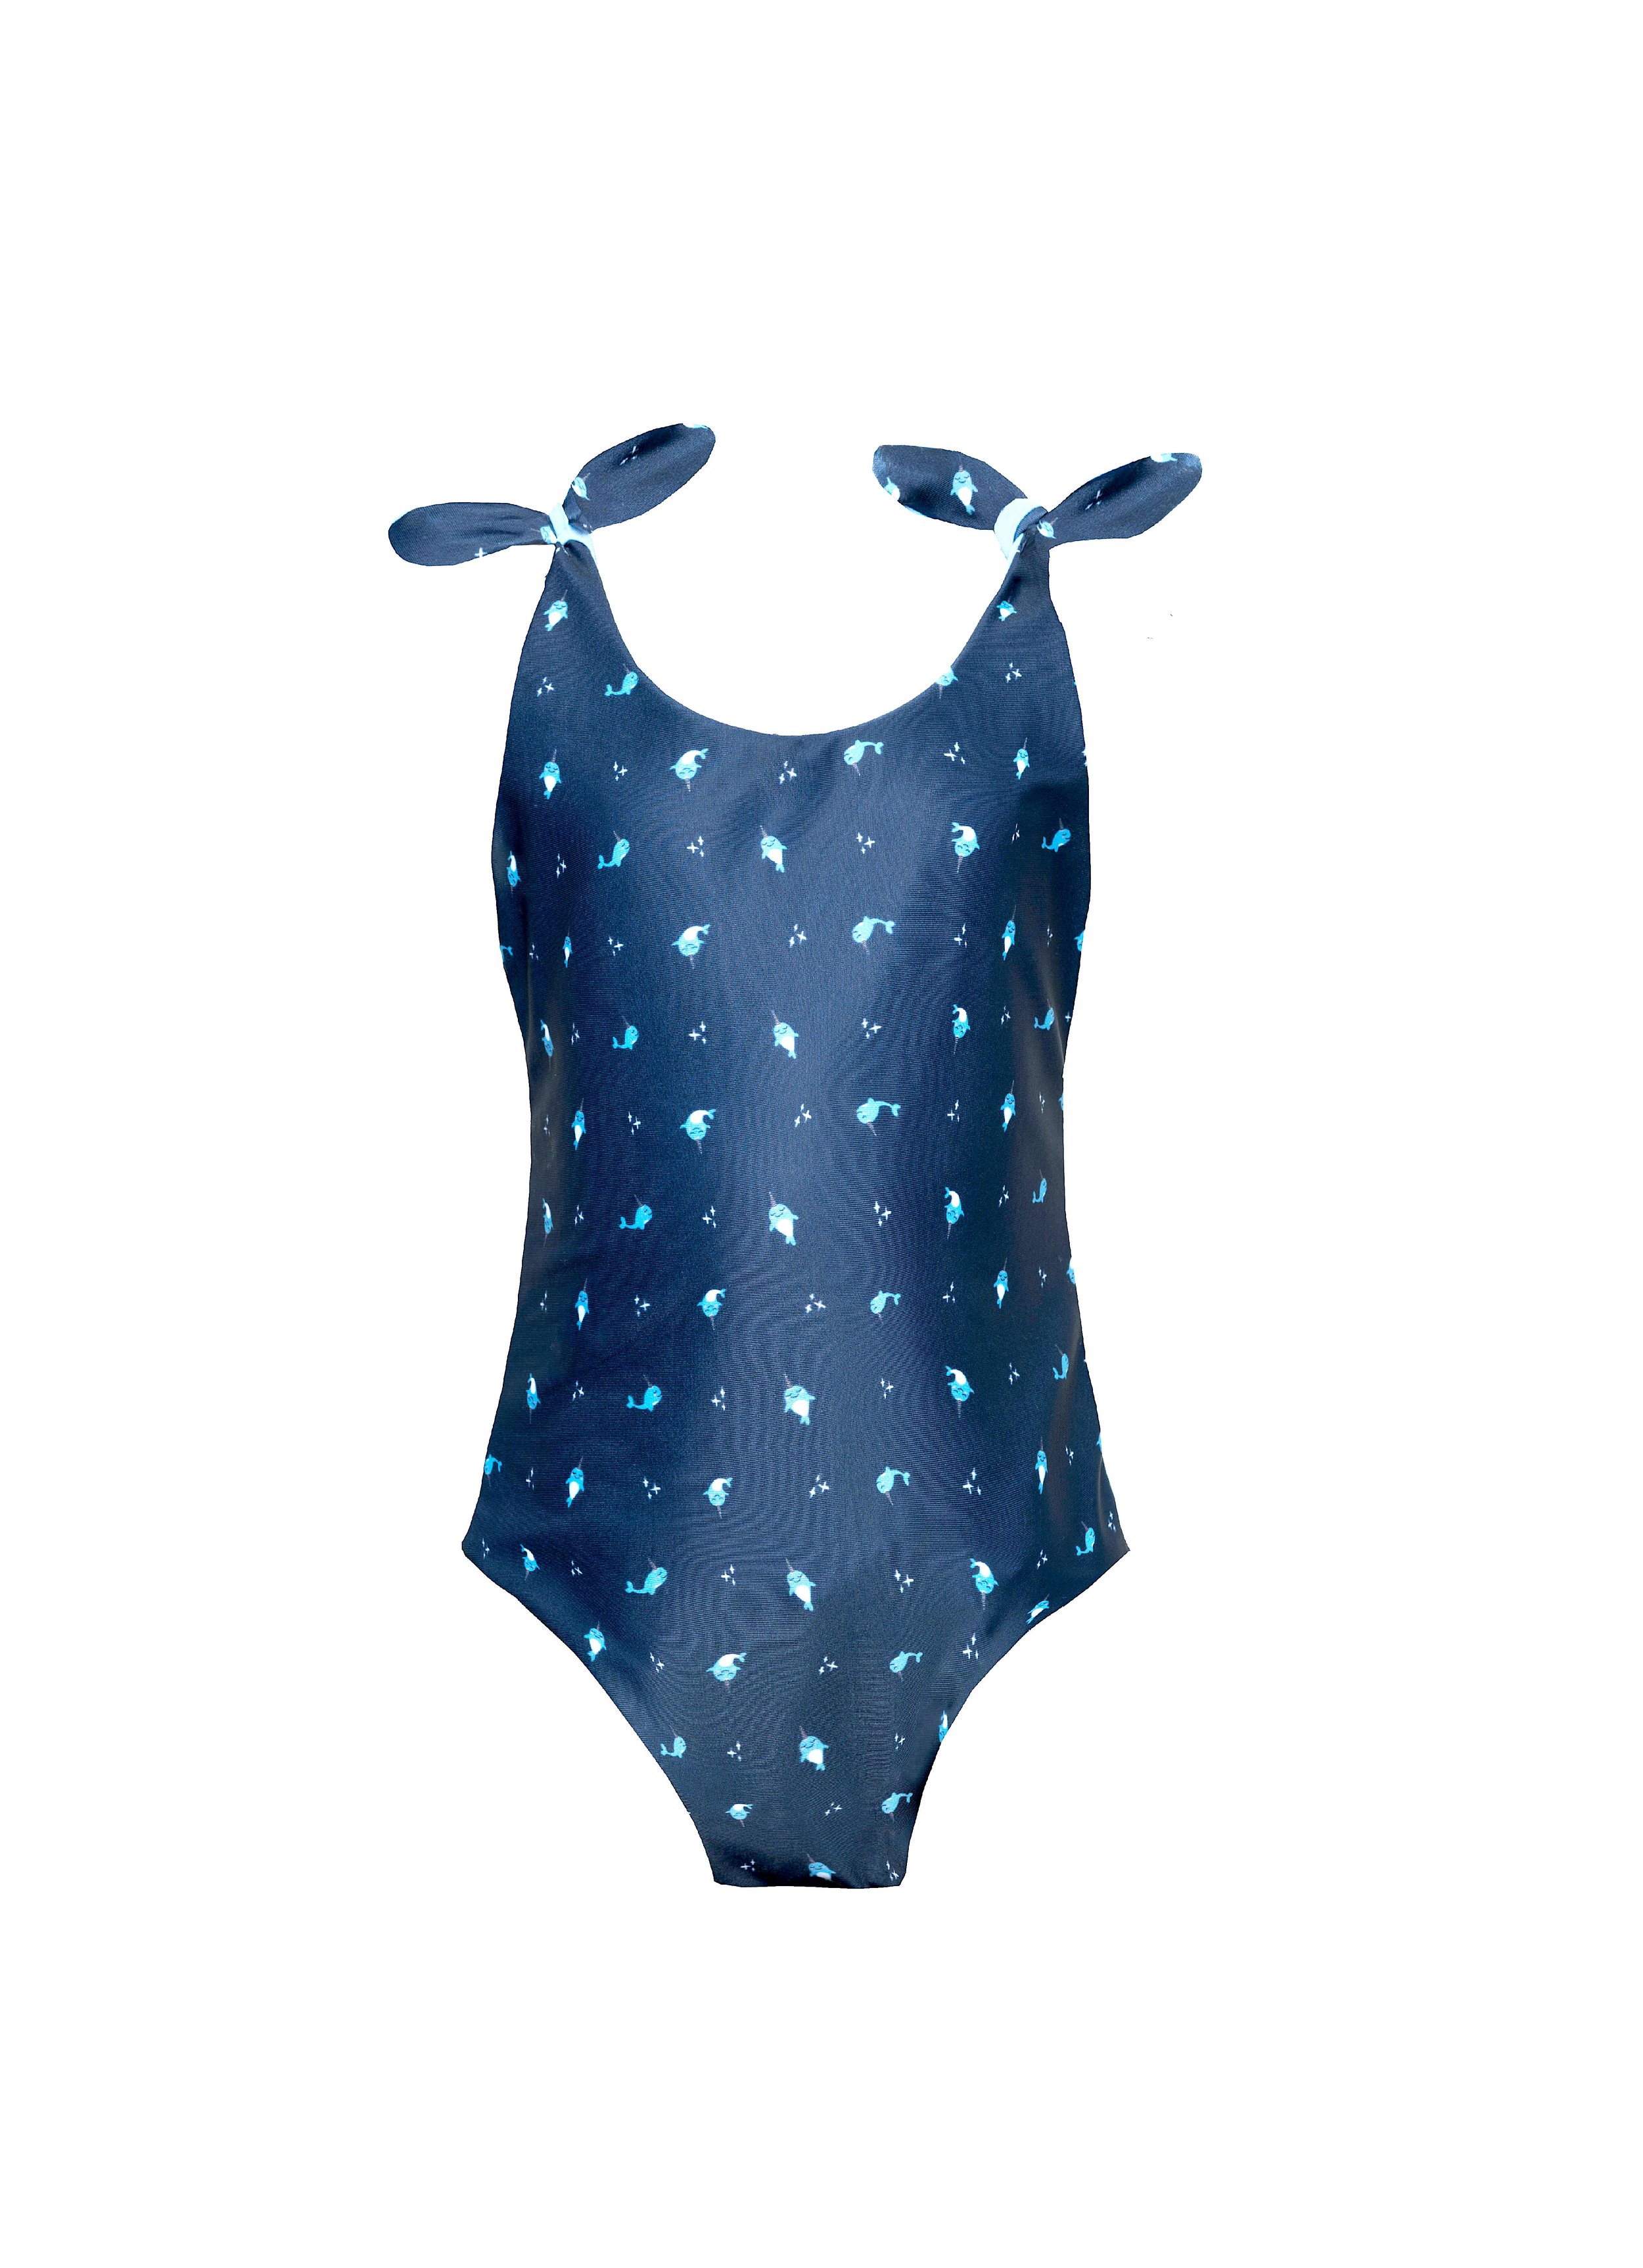 https://www.pollyswimwear.com/babygirl/olivia-costume-intero-reversibile-deep-blue